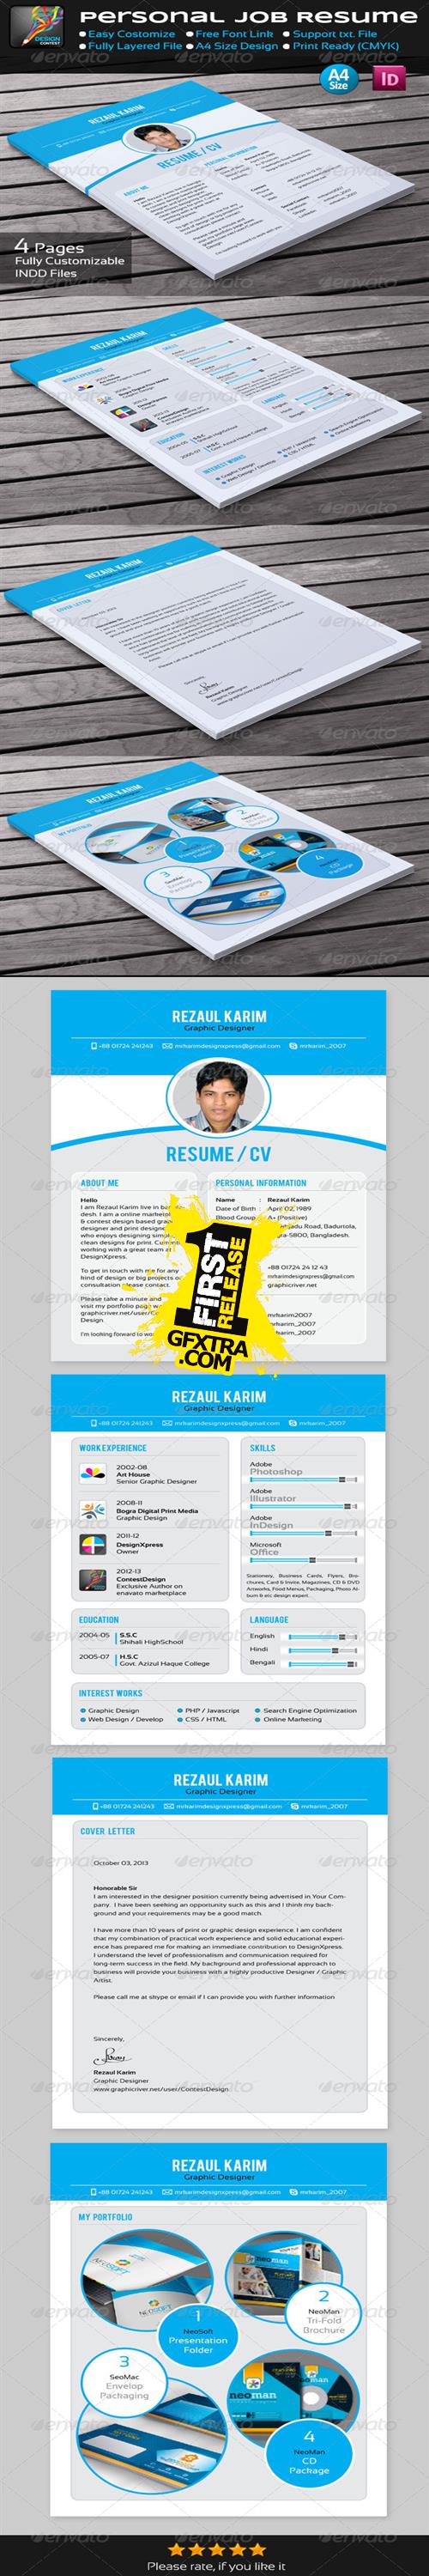 GraphicRiver - Personal Job Resume